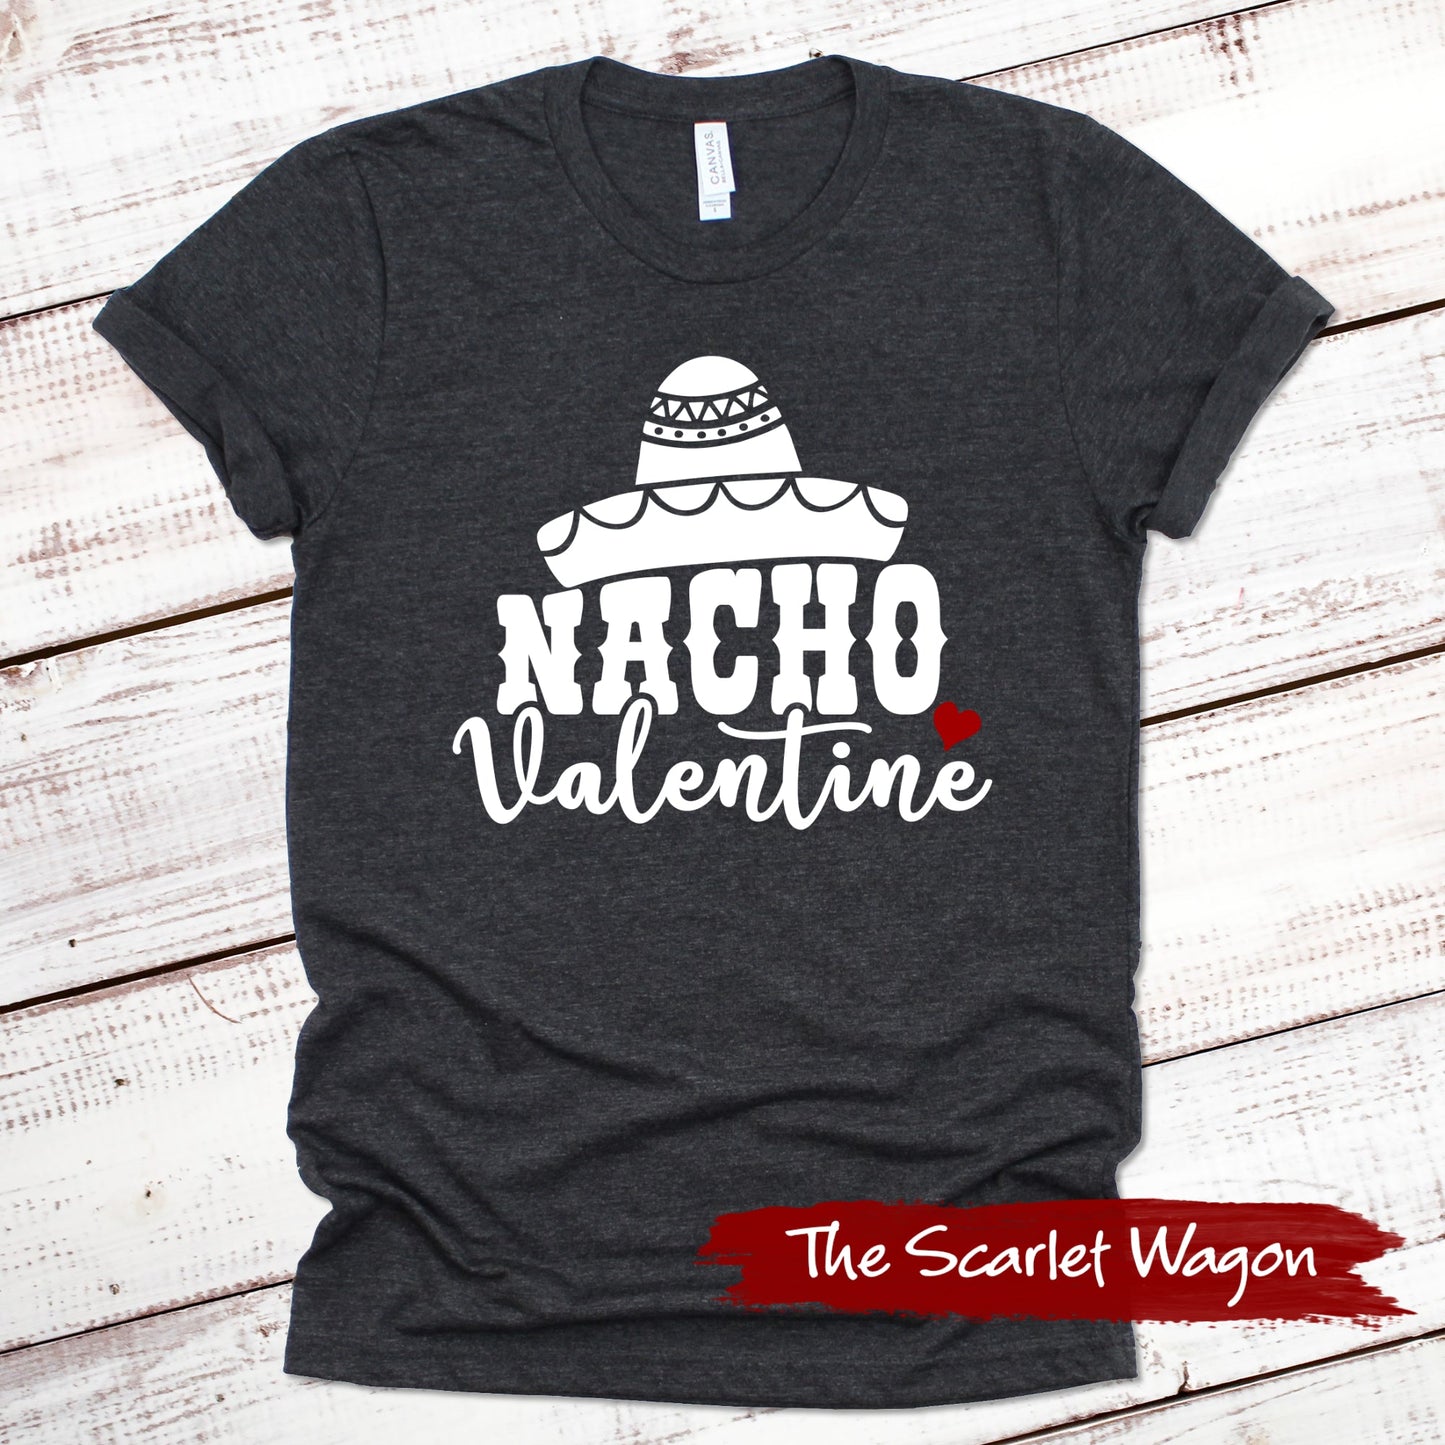 Nacho Valentine Christmas Shirt Scarlet Wagon Dark Gray Heather XS 